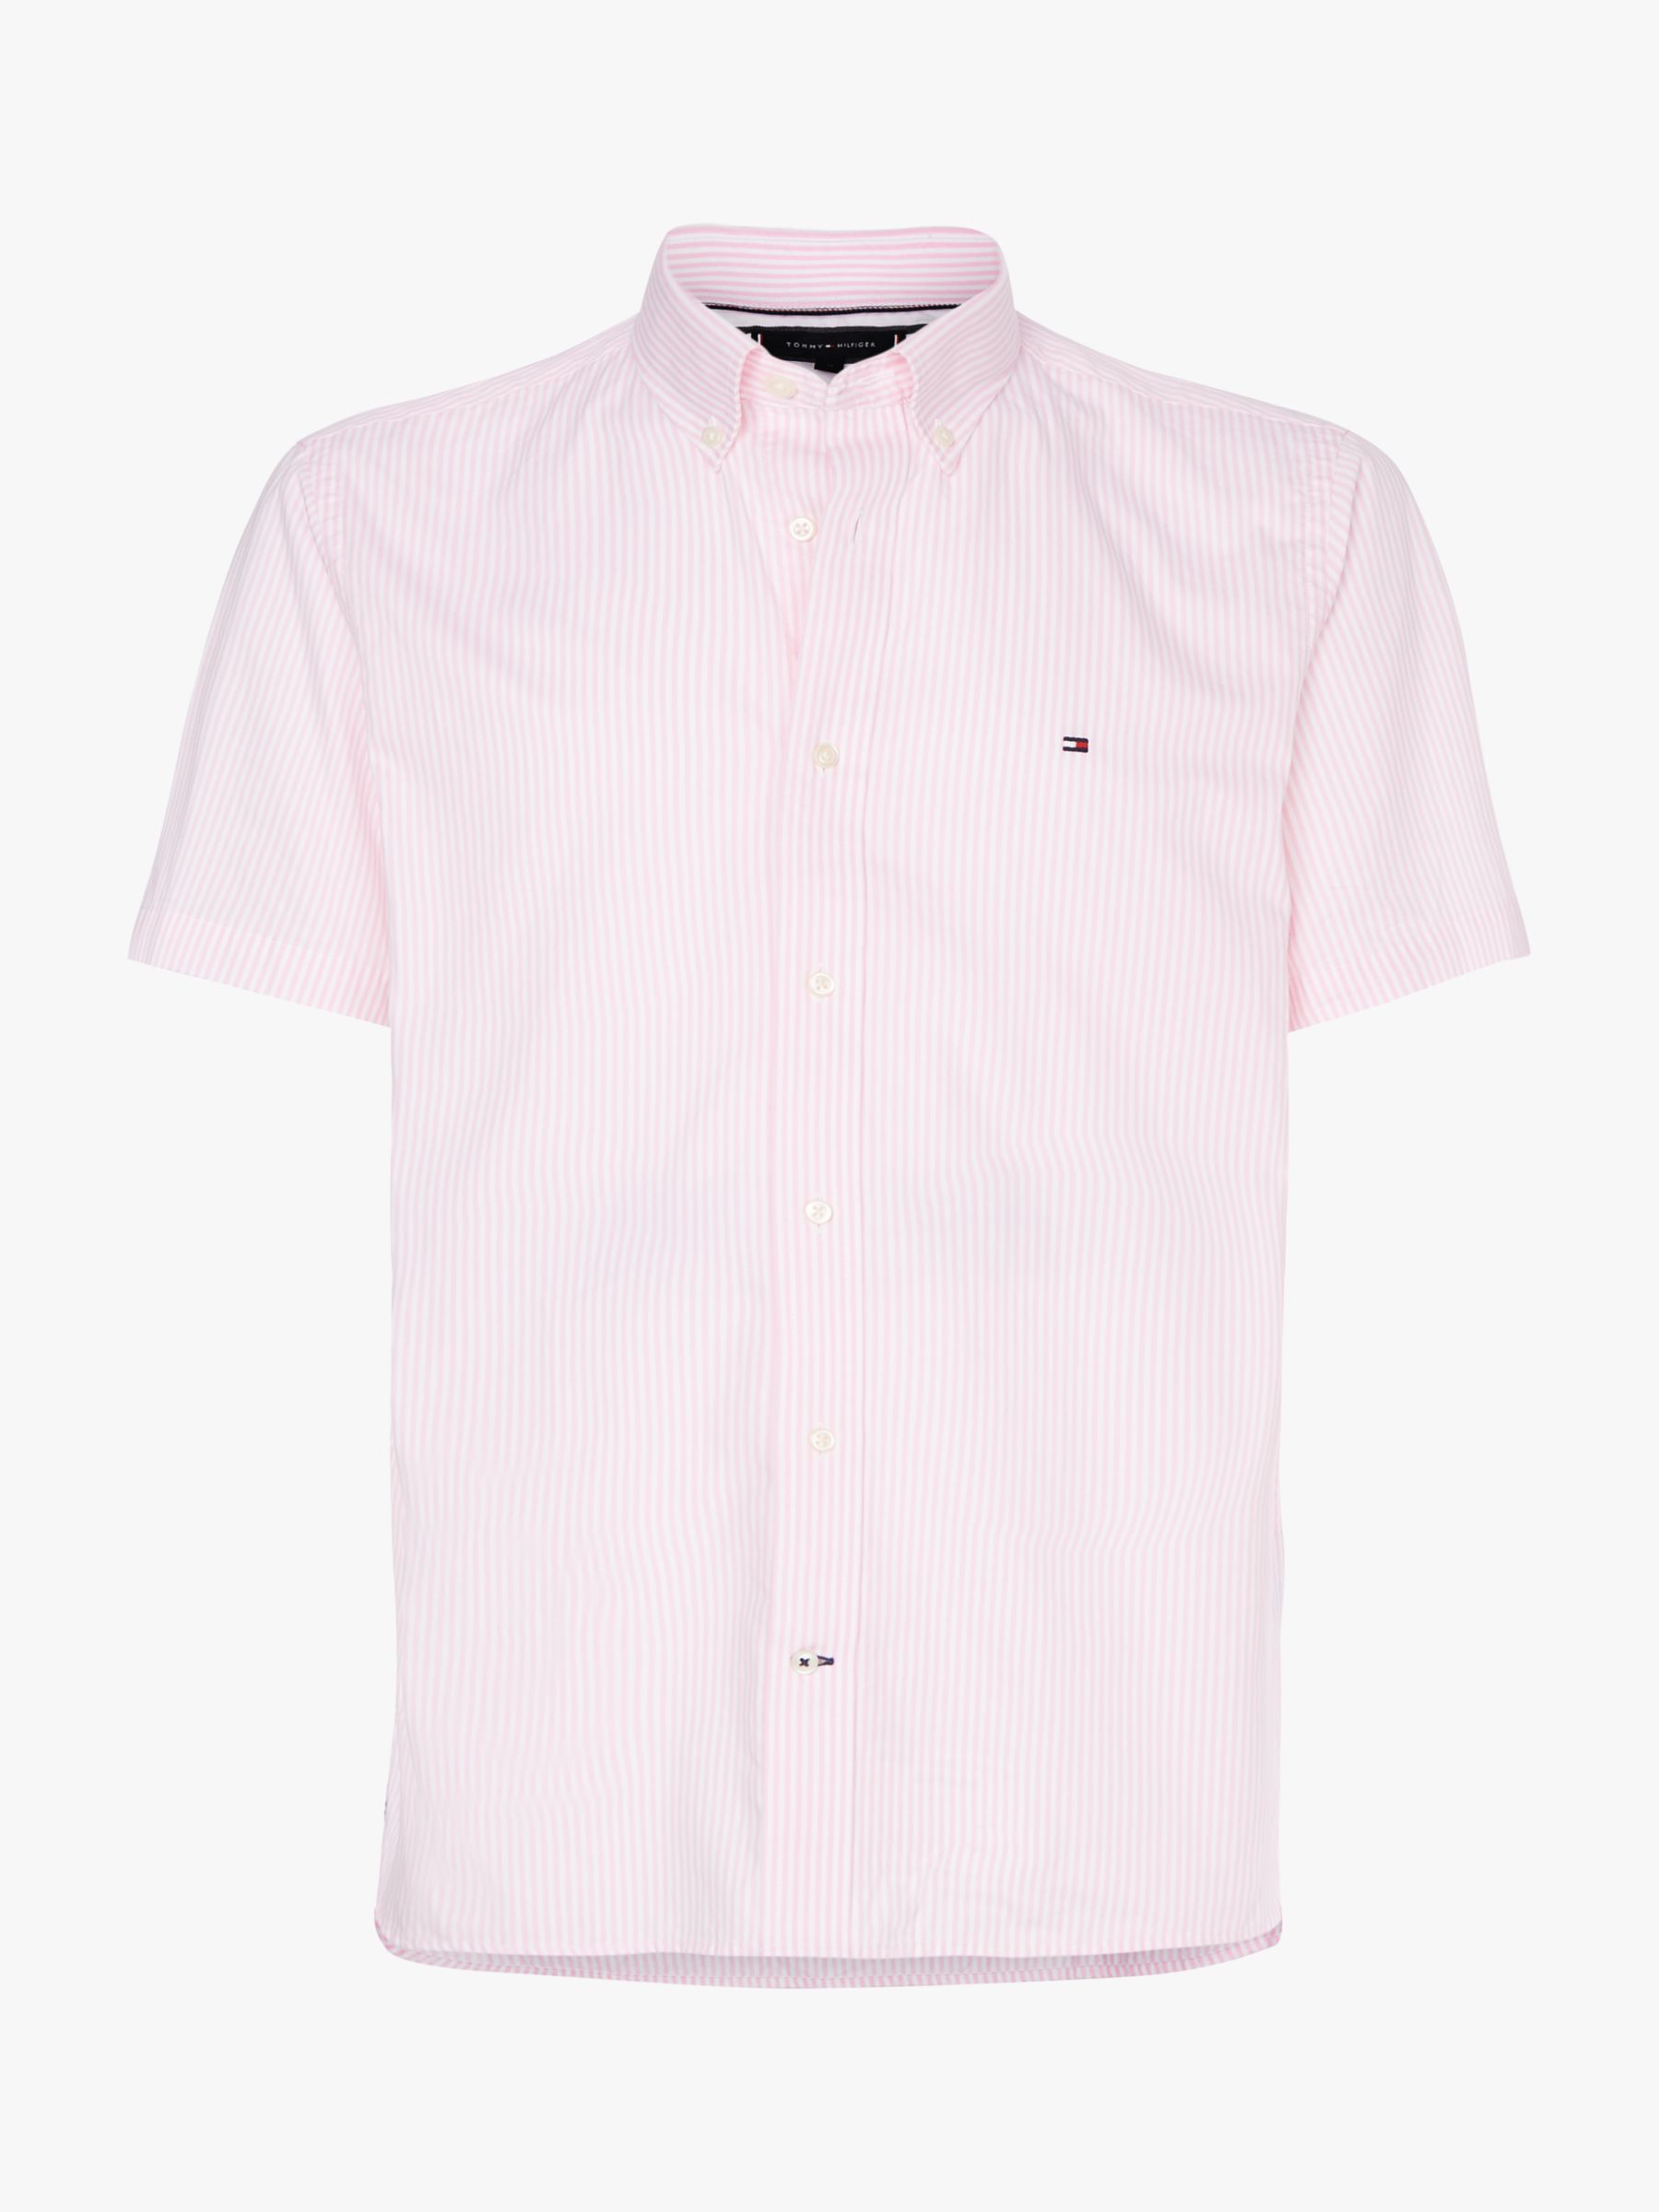 tommy hilfiger pink striped shirt